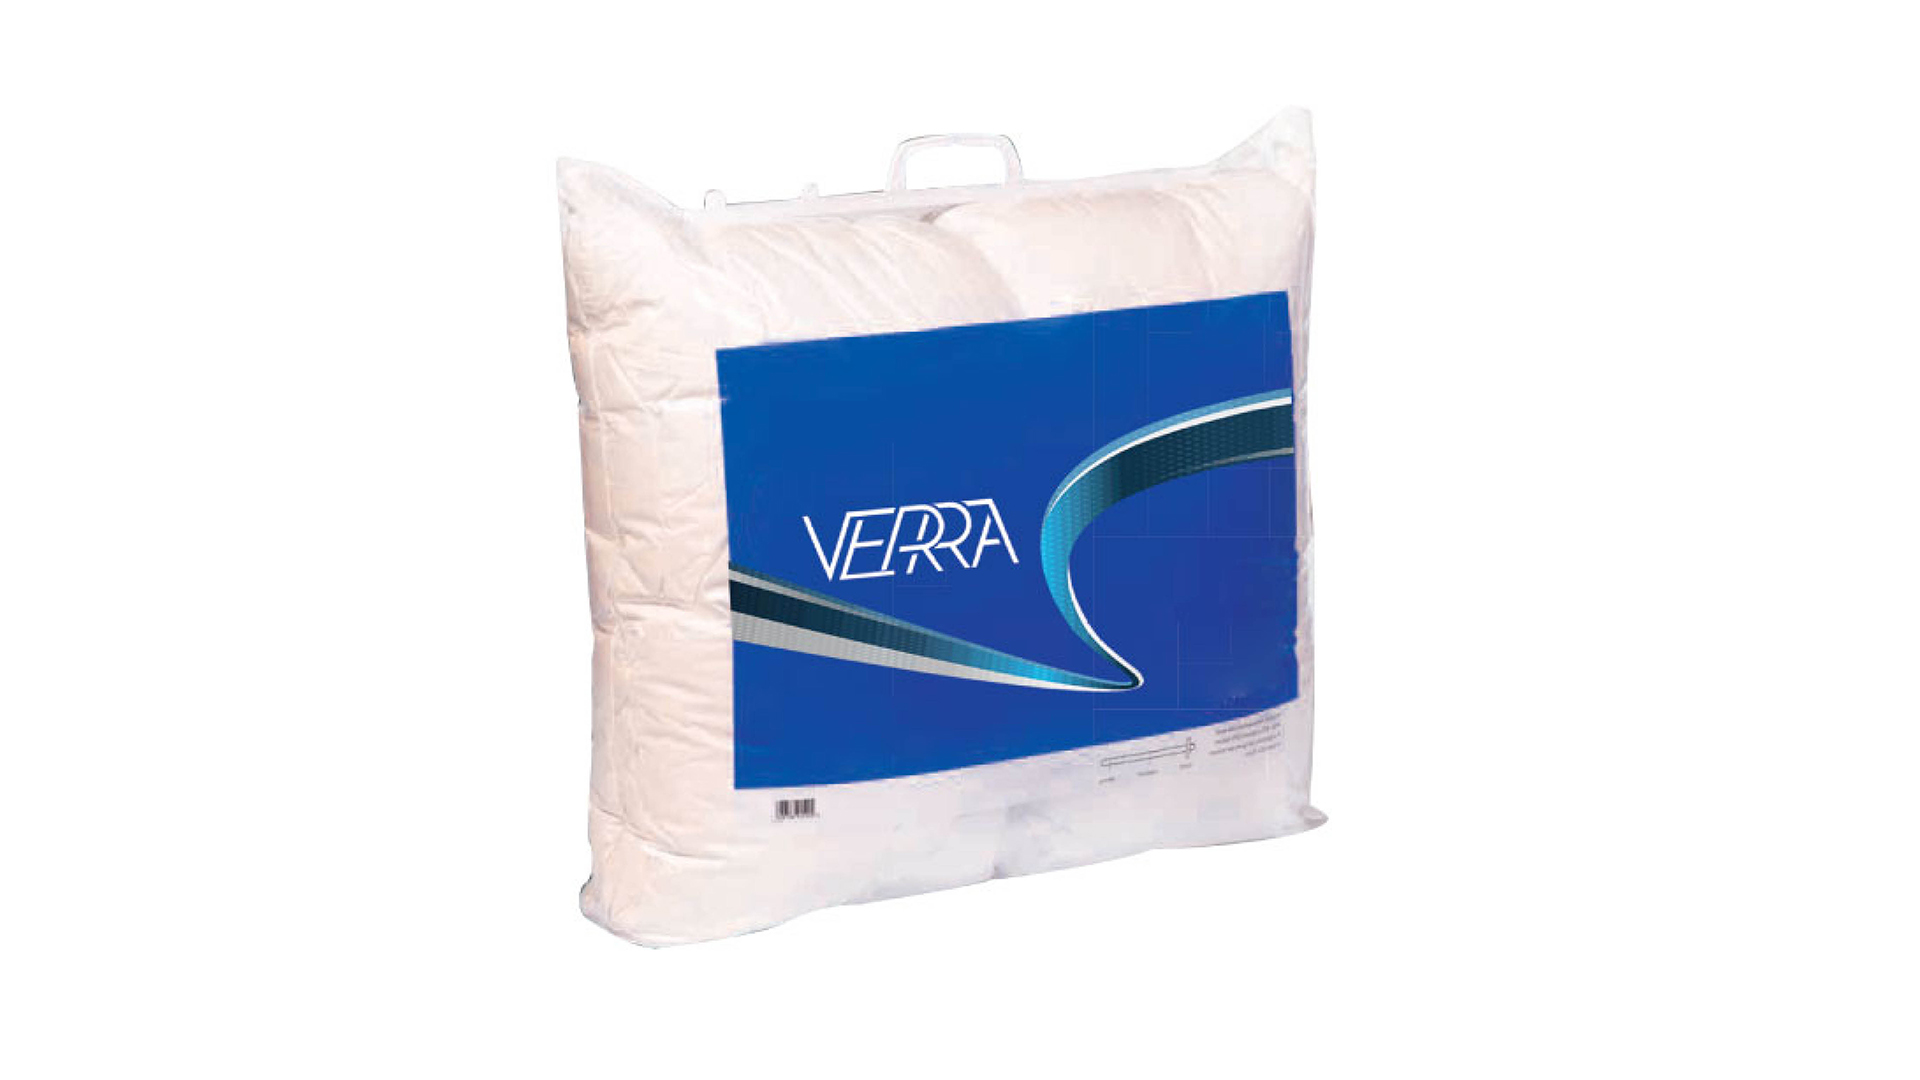 Pvc Bags For Pillows Comforters VB19